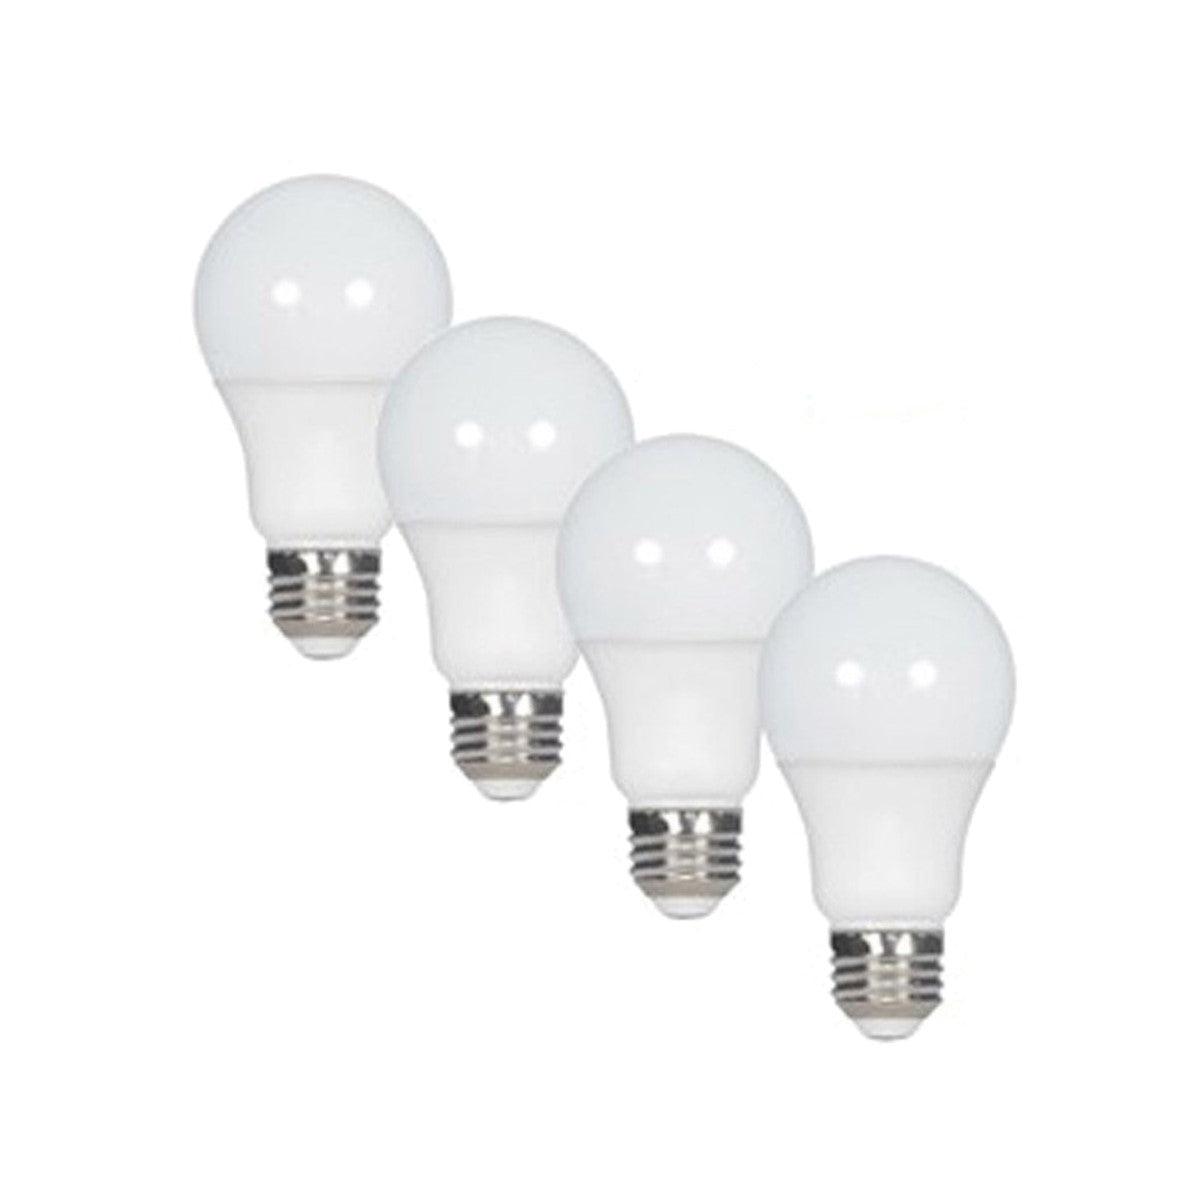 A19 LED Bulb, 100W Equivalent, 16 Watt, 1490 Lumens, 2700K, E26 Medium Base, Frosted Finish, Pack Of 4 - Bees Lighting